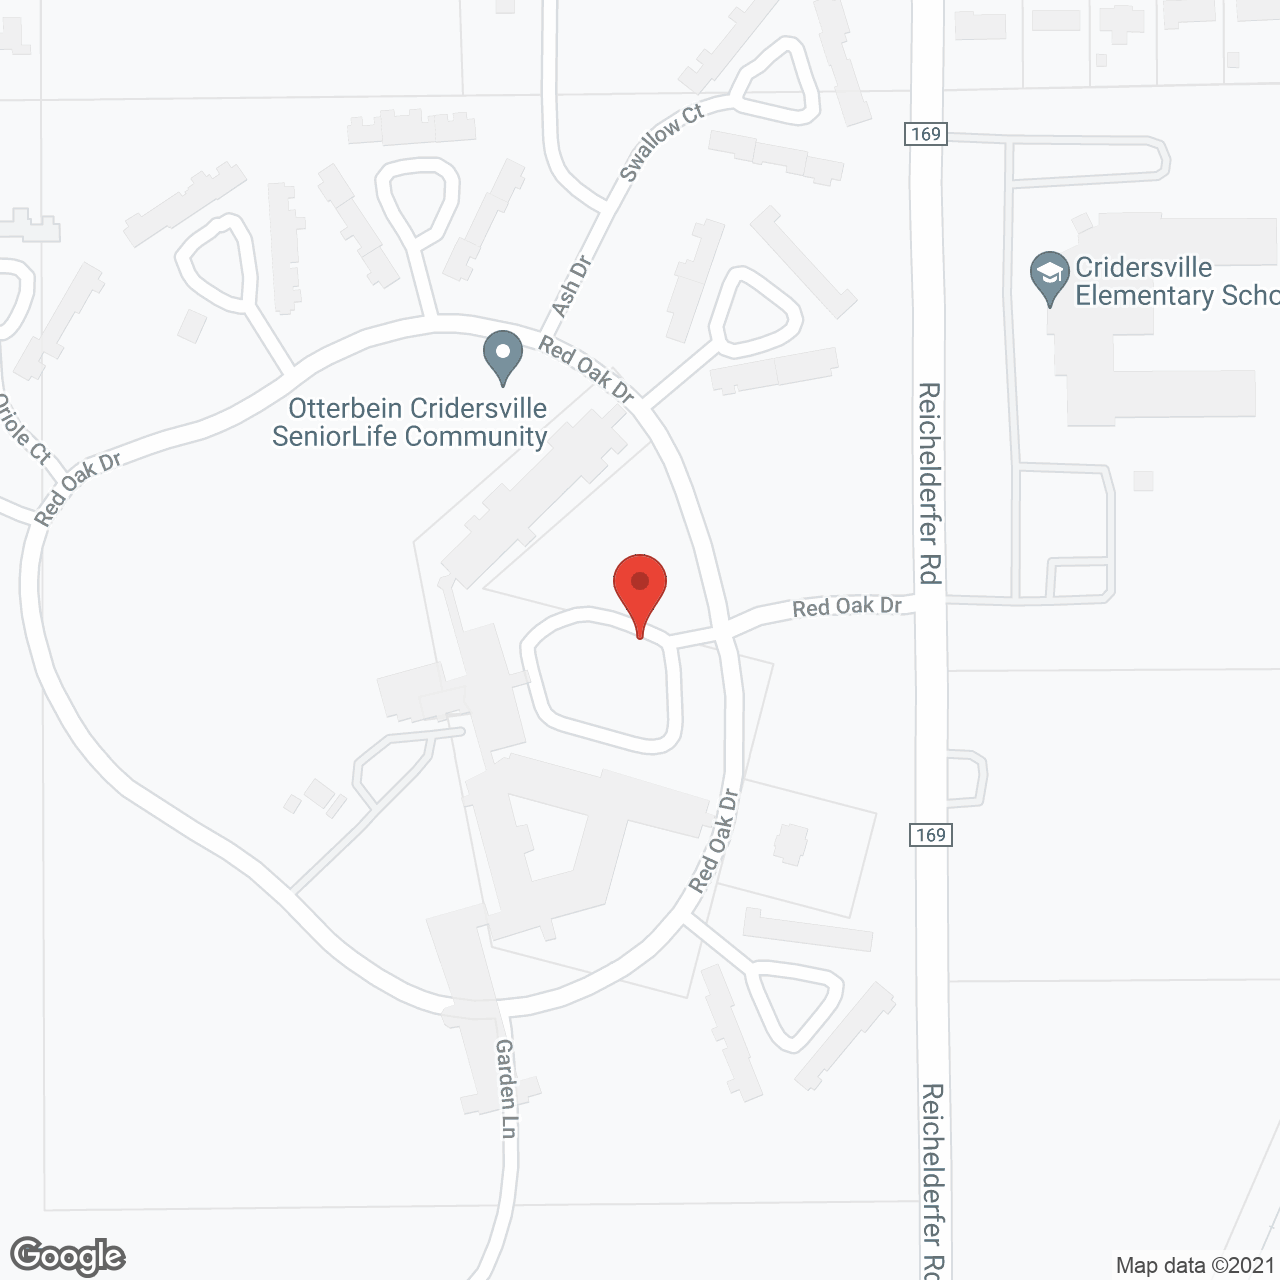 Otterbein Cridersville SeniorLife Community in google map